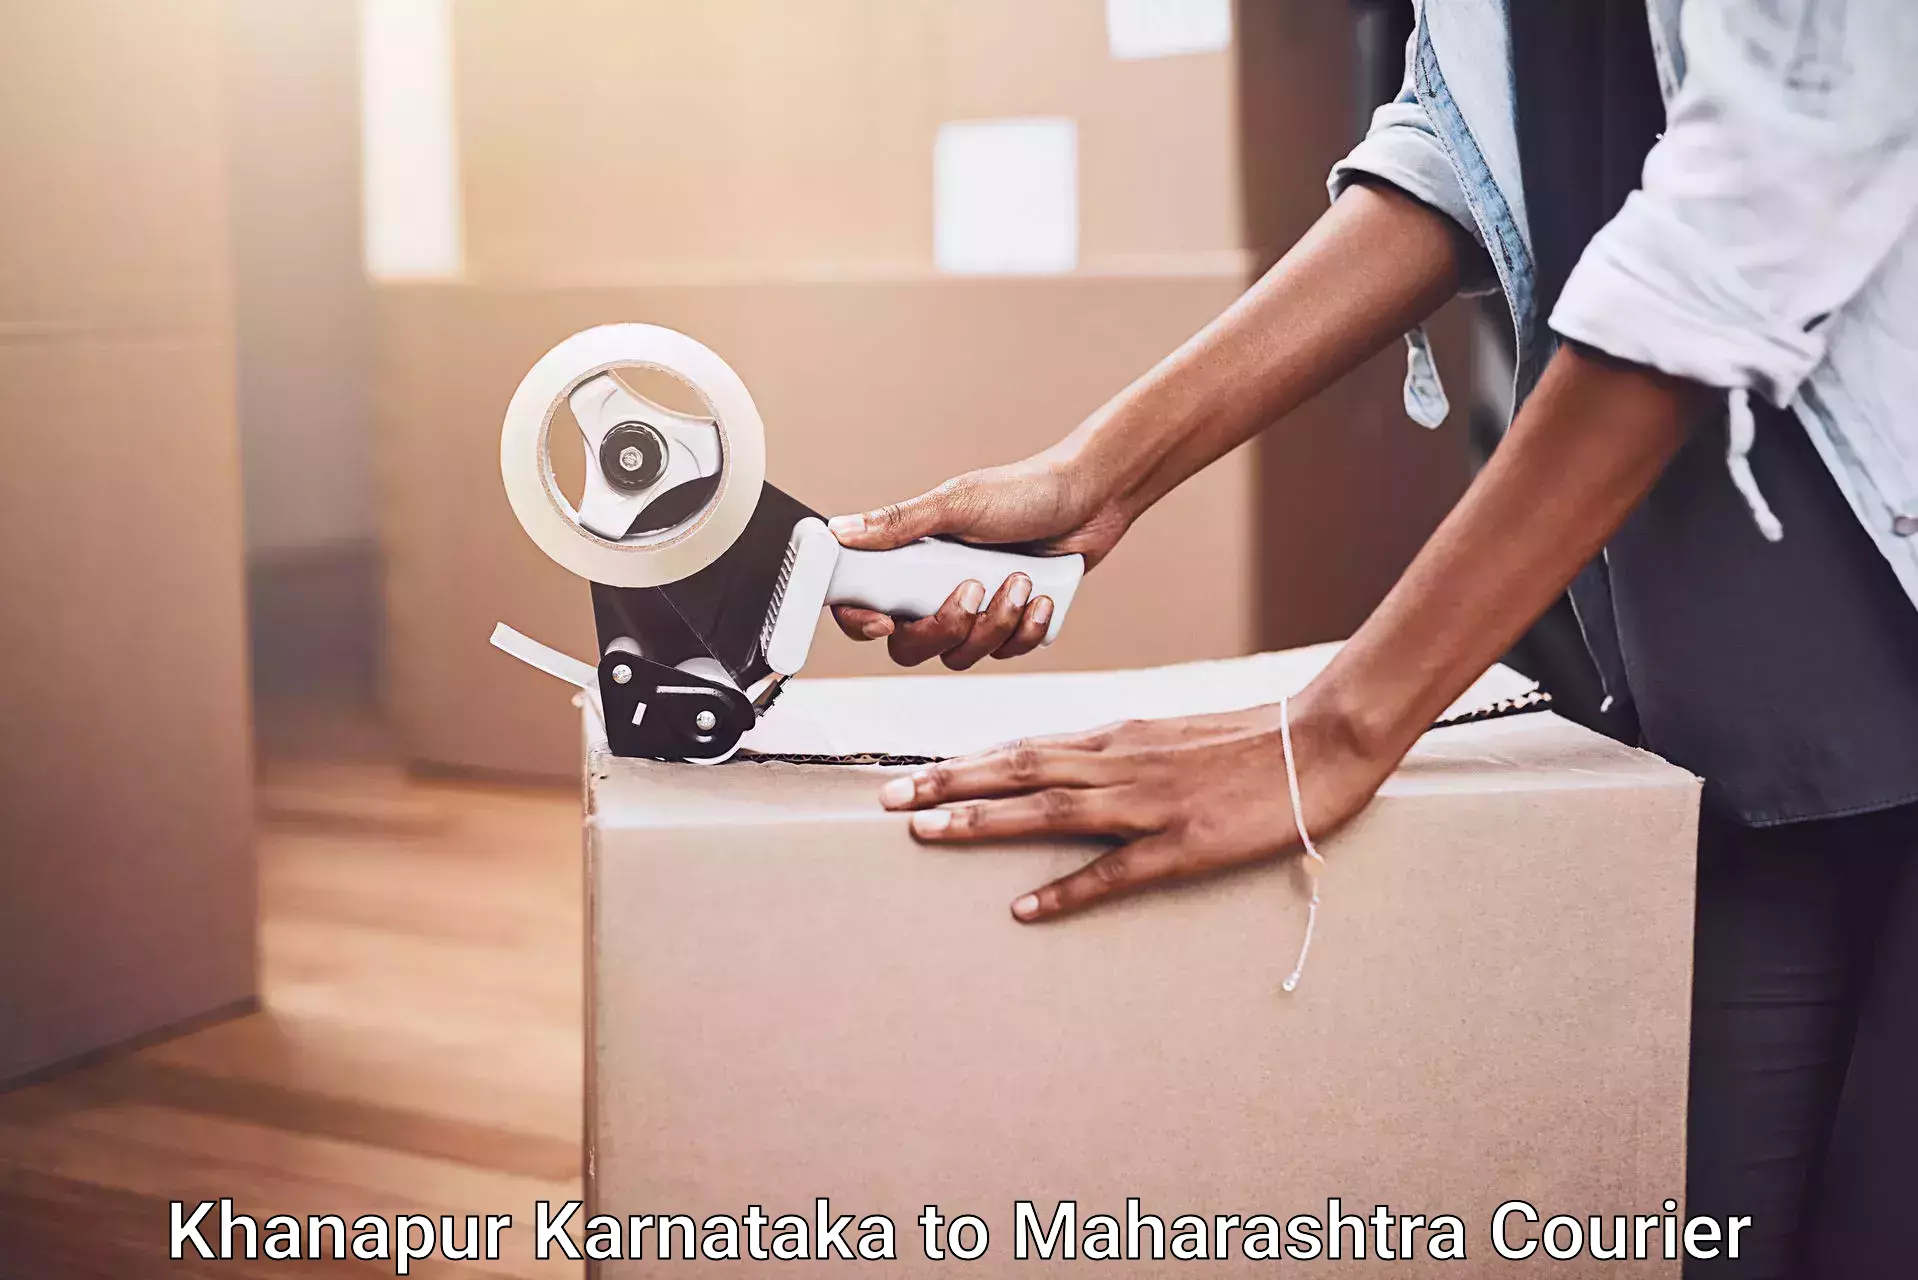 Moving and handling services in Khanapur Karnataka to Alephata